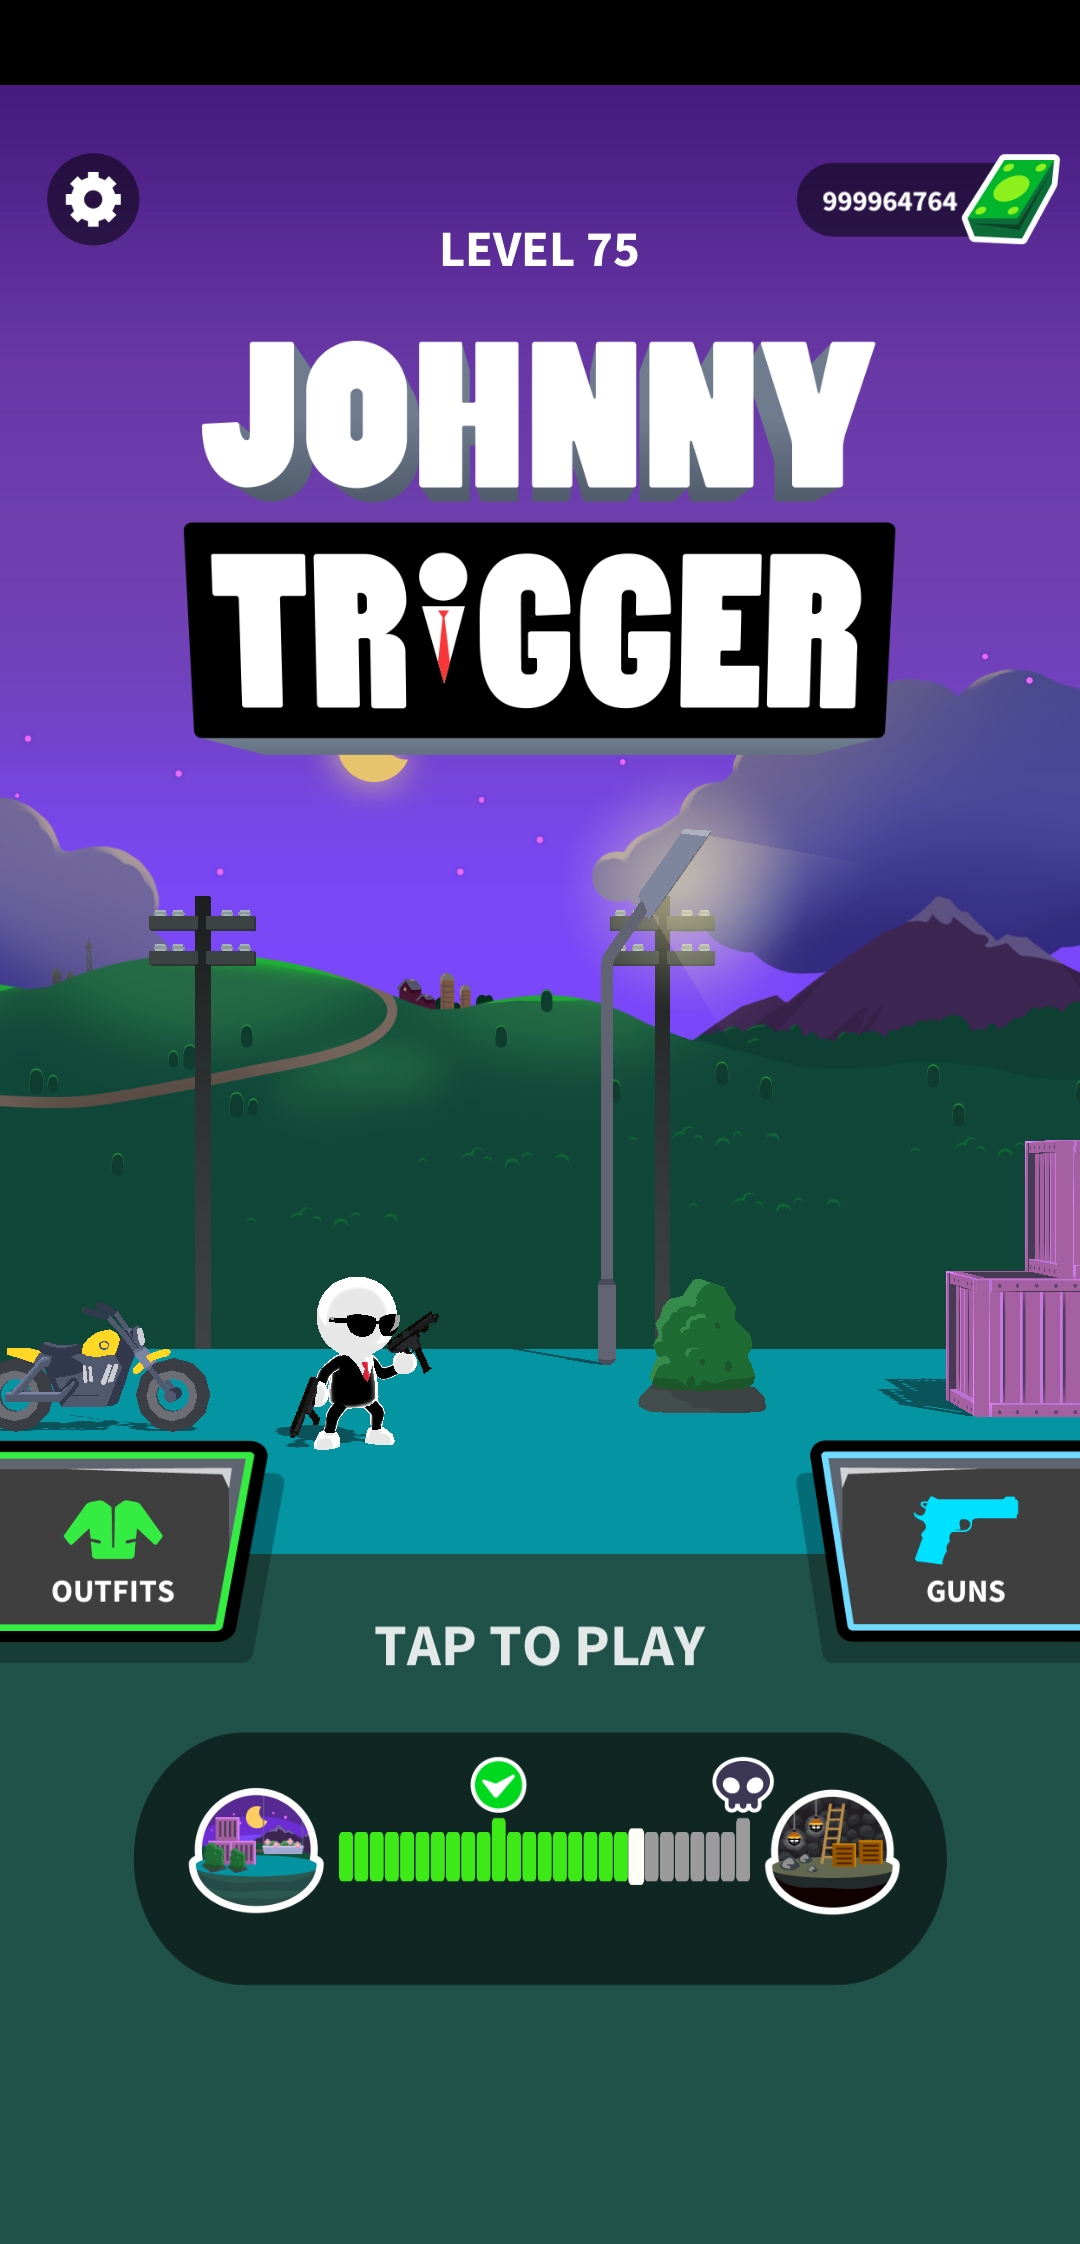 Johnny Trigger攻略 关于Johnny Trigger的新手玩法解析及通关介绍